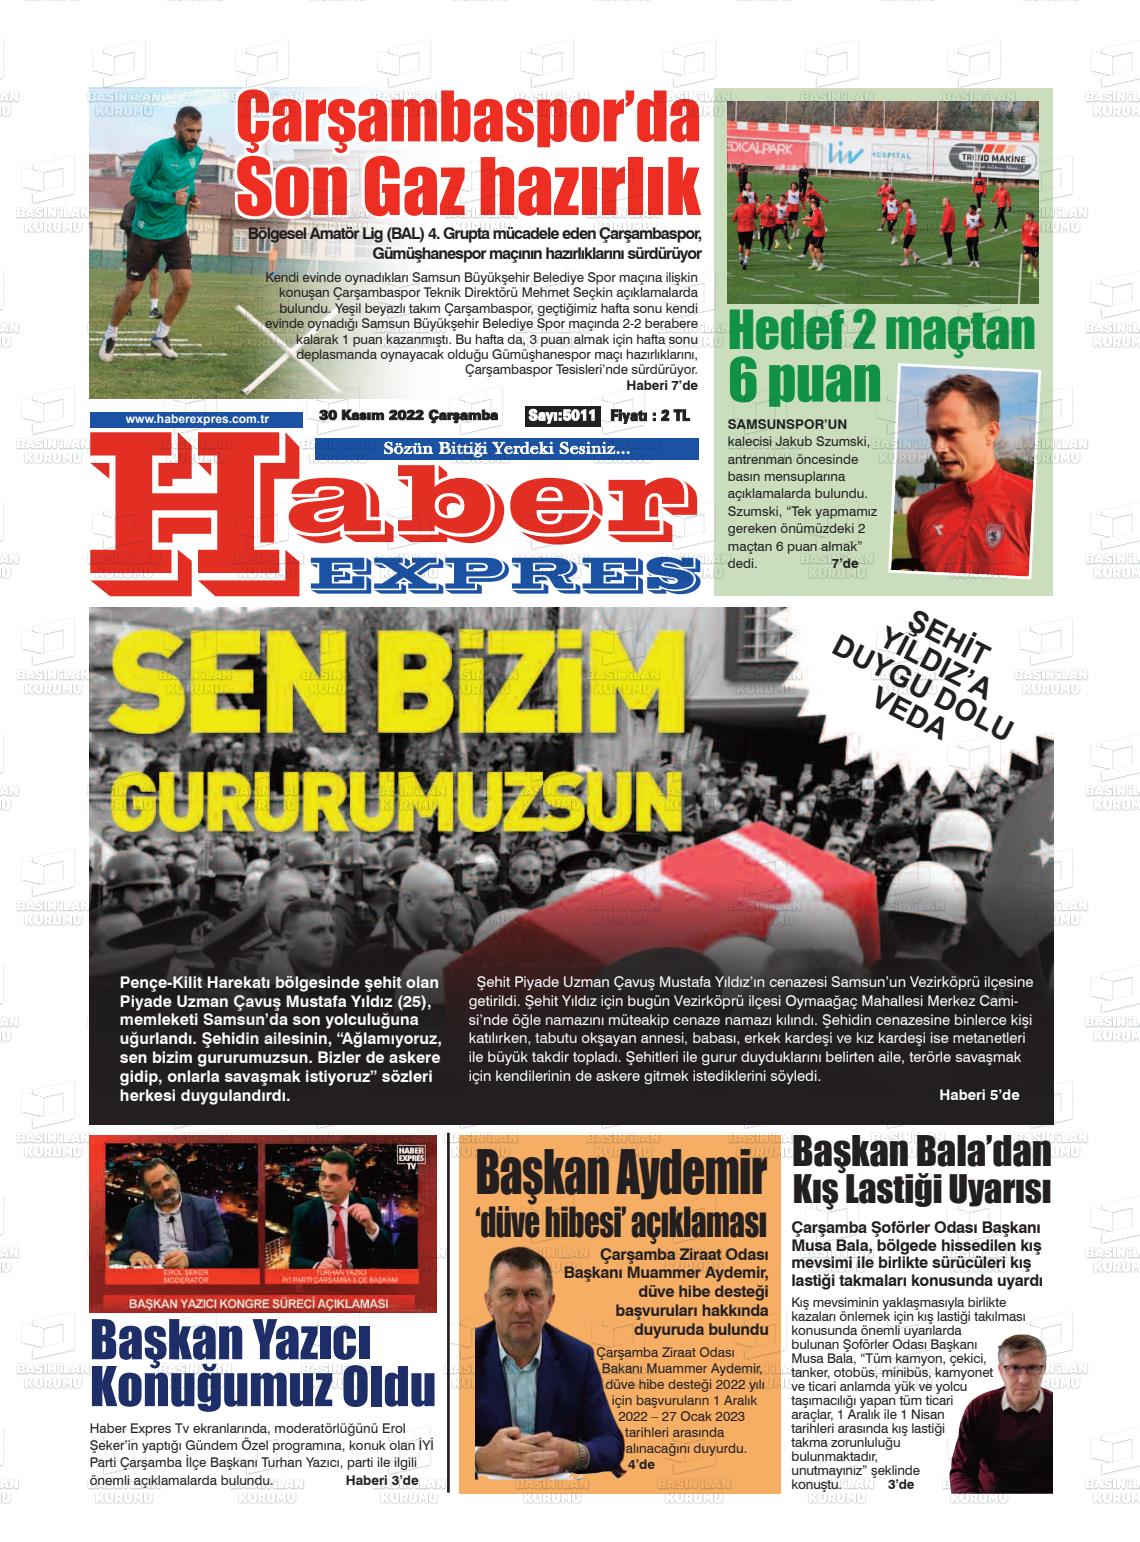 30 Kasım 2022 Haber Expres Gazete Manşeti